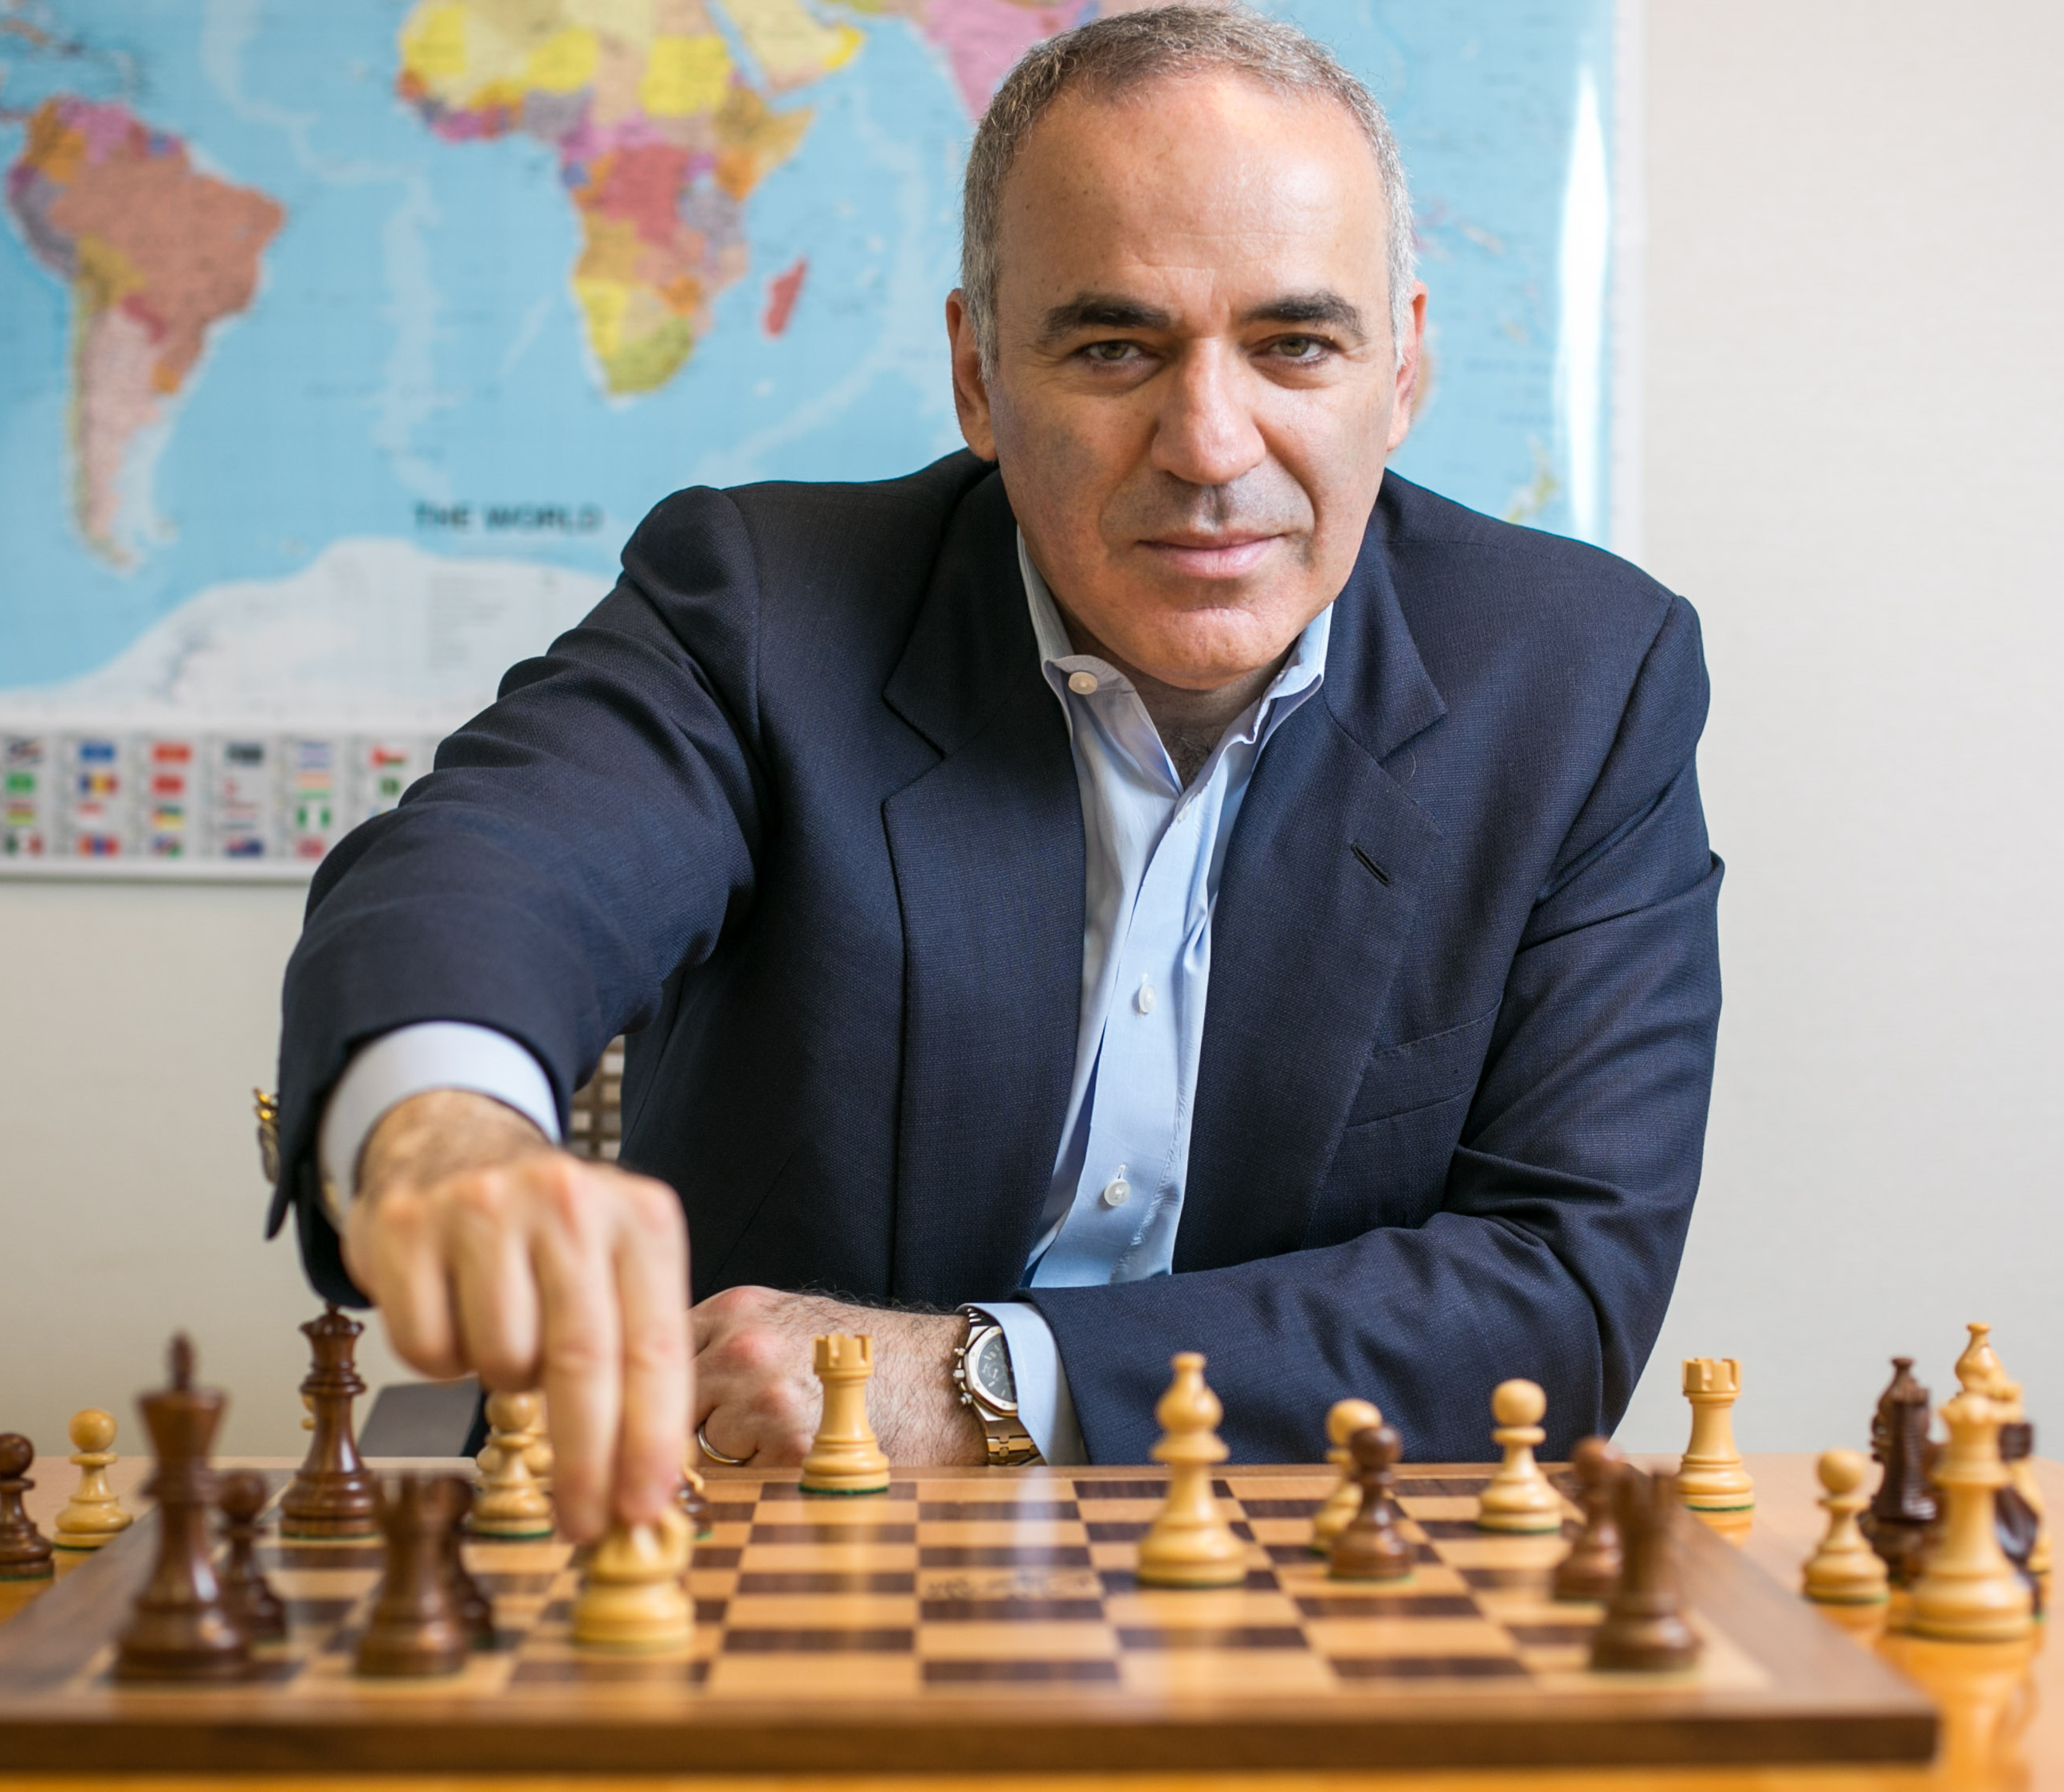 Garry Kasparov on Modern Chess, Part 4: Kasparov vs Karpov 1988-2009  (English Edition) - eBooks em Inglês na